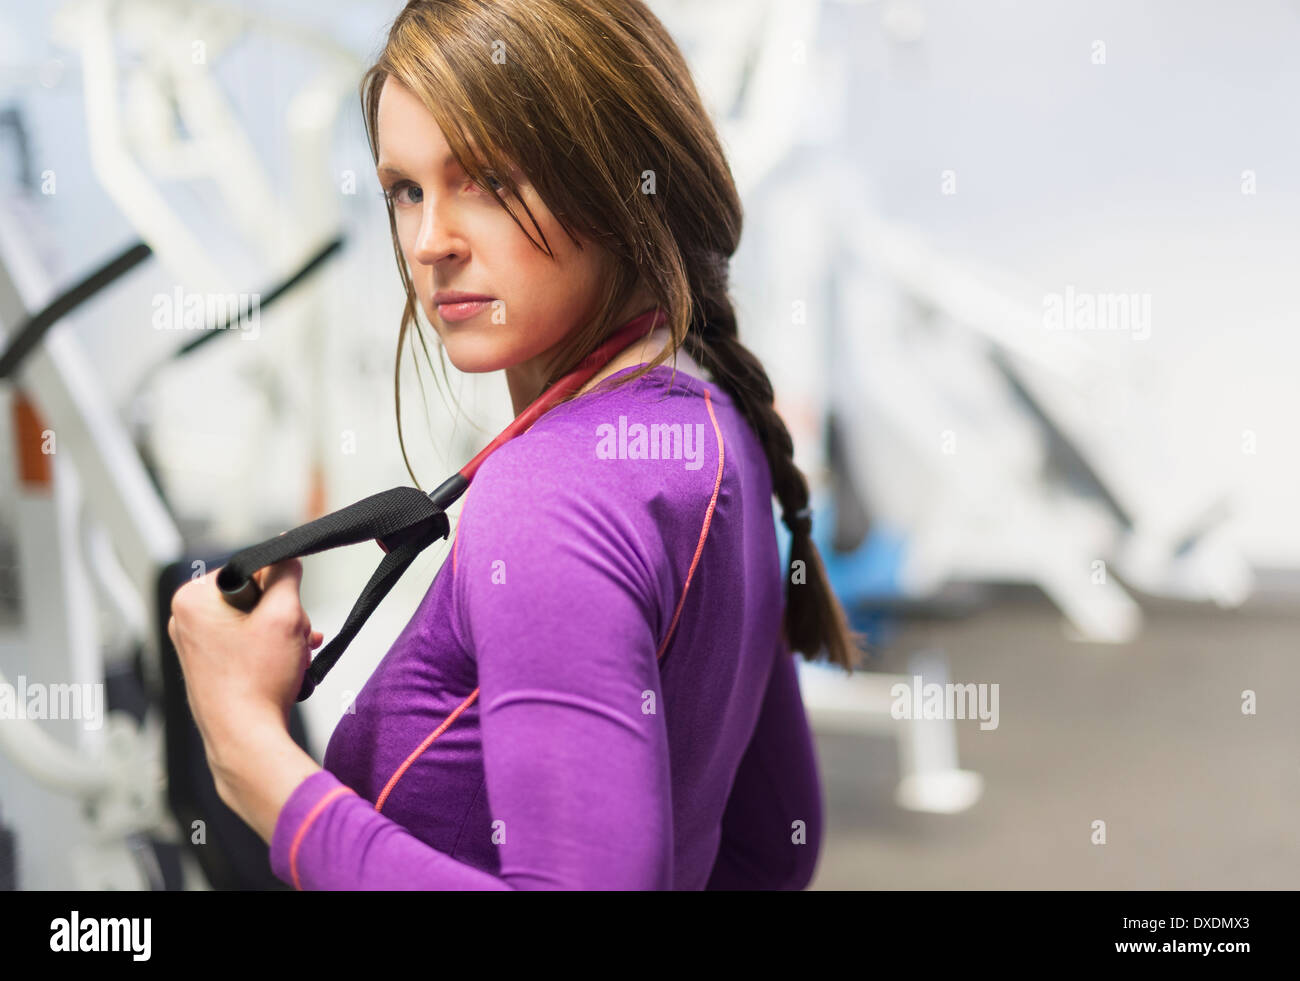 Portrait of woman exercising Stock Photo